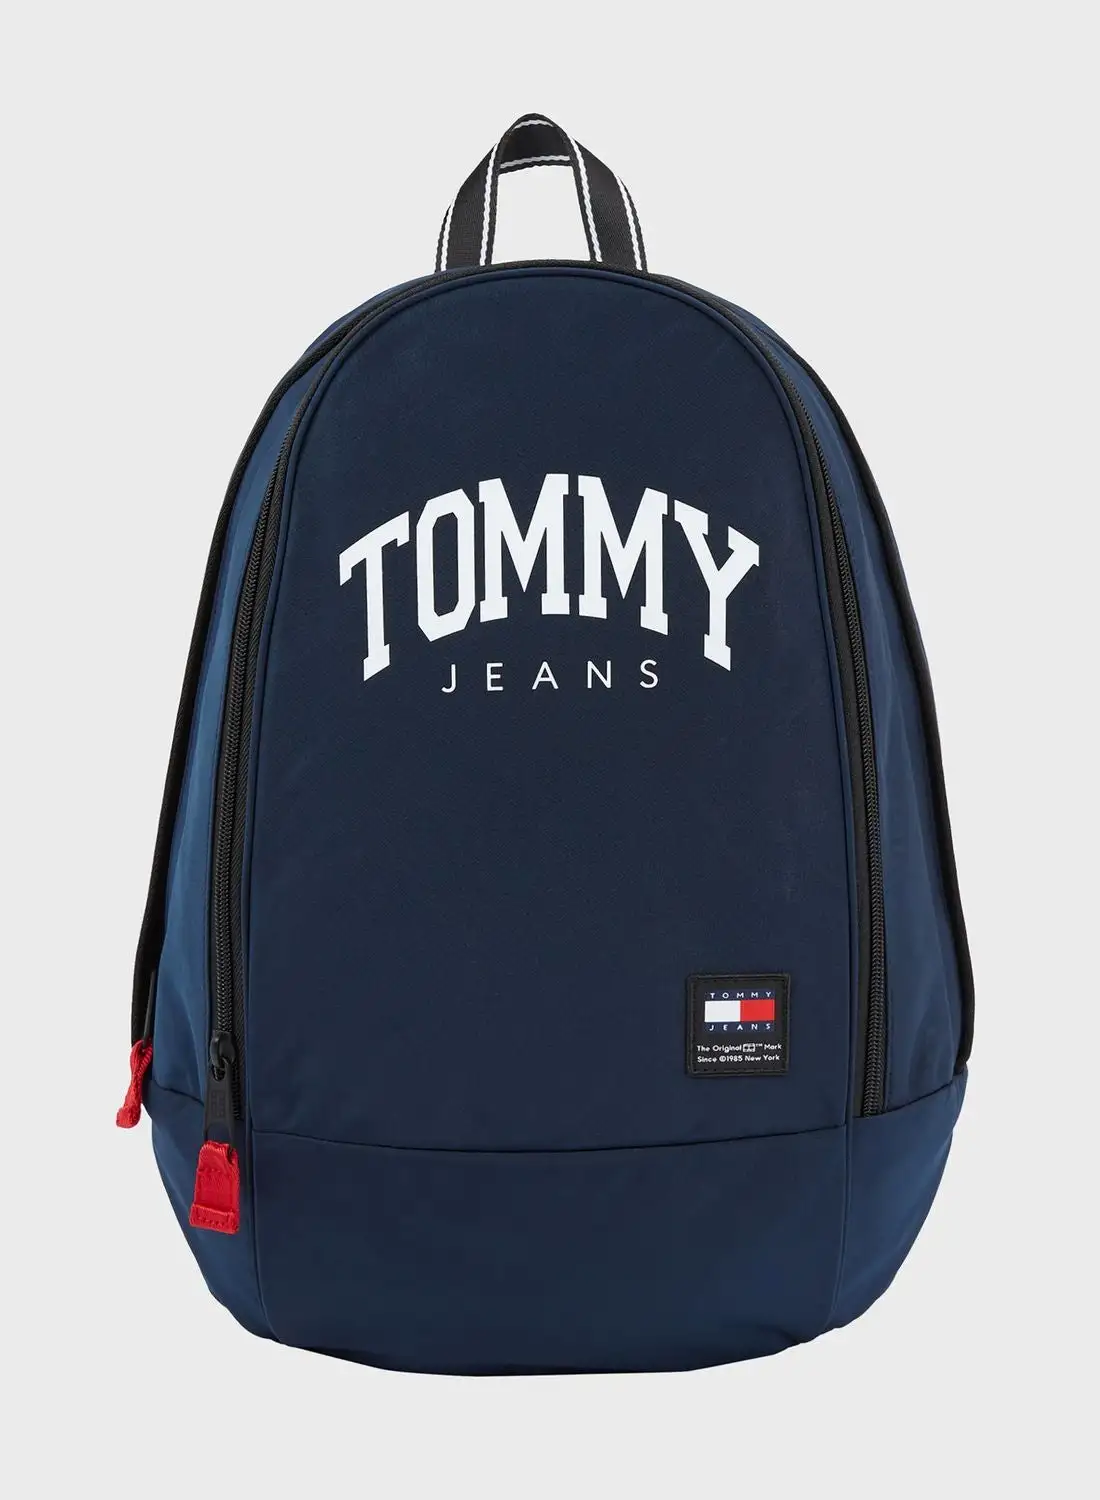 TOMMY JEANS Logo Backpack